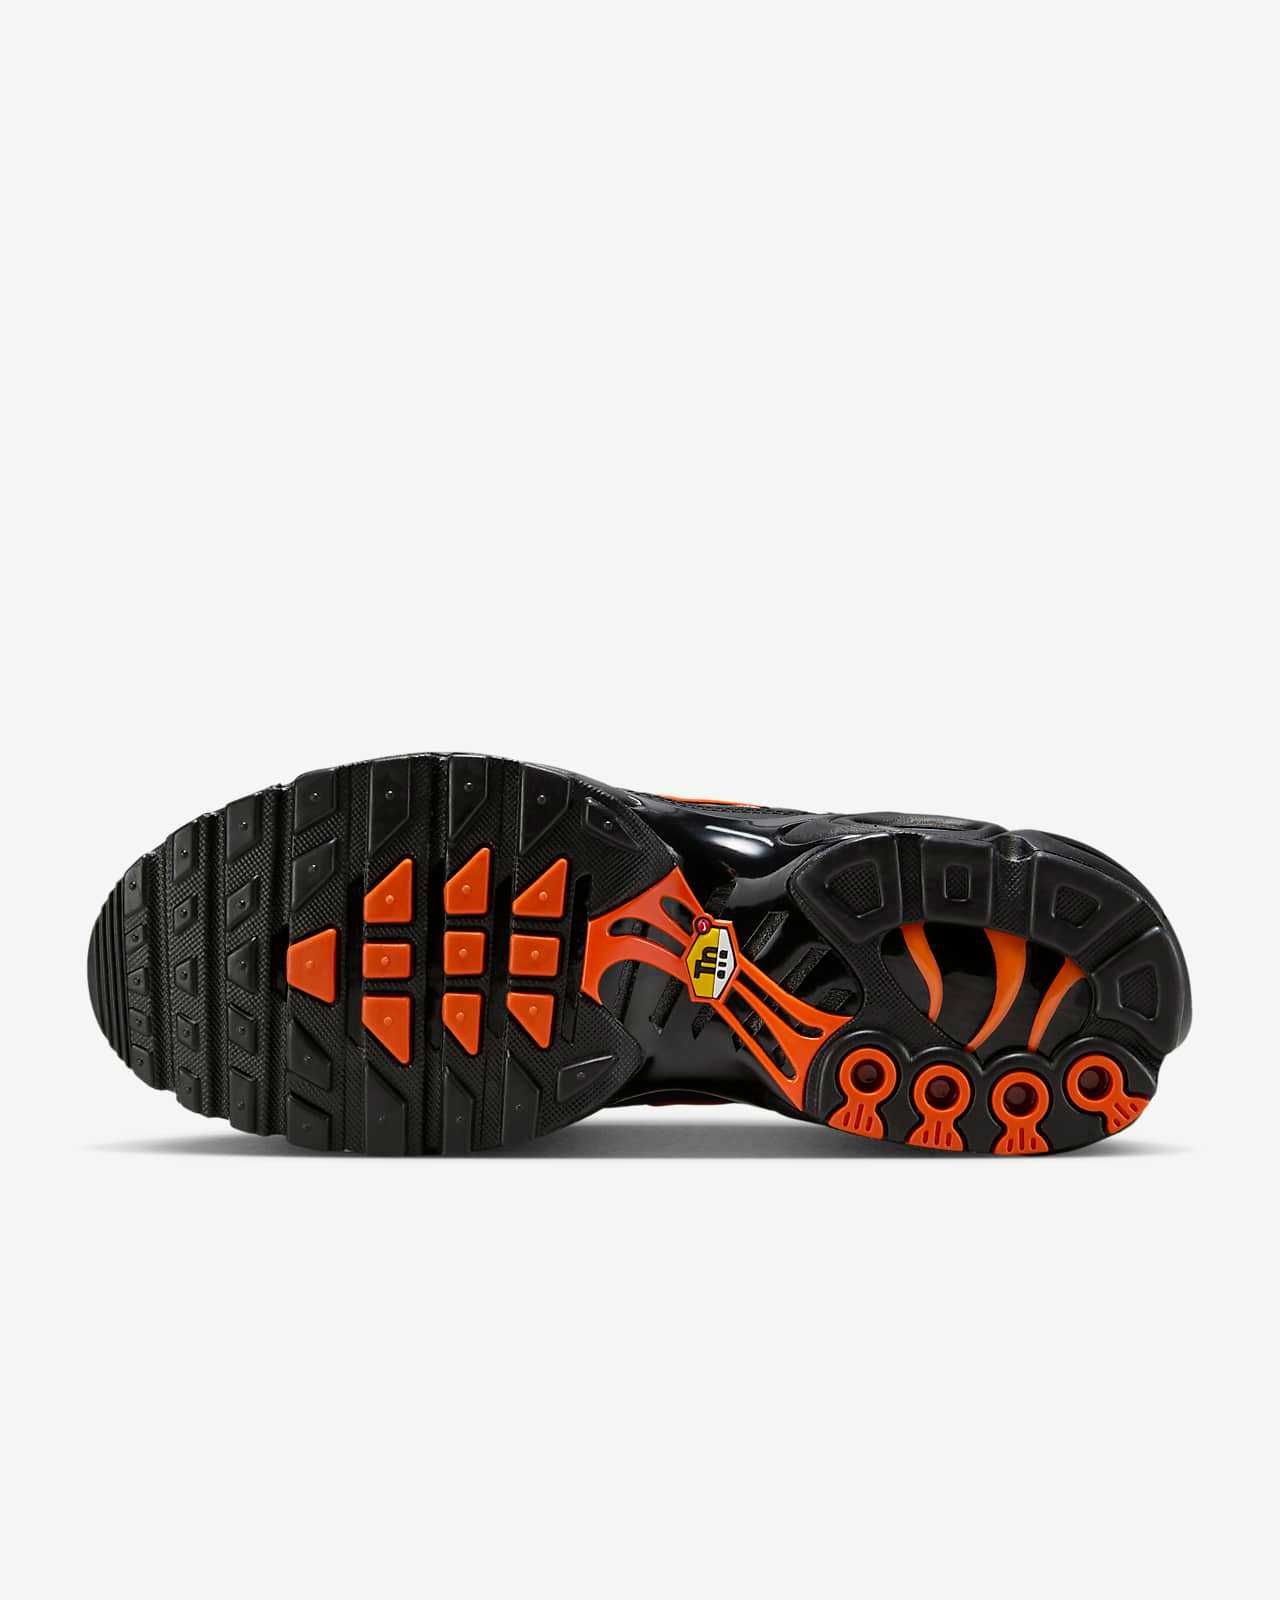 Nike Air Max Plus Men's Shoes Camo